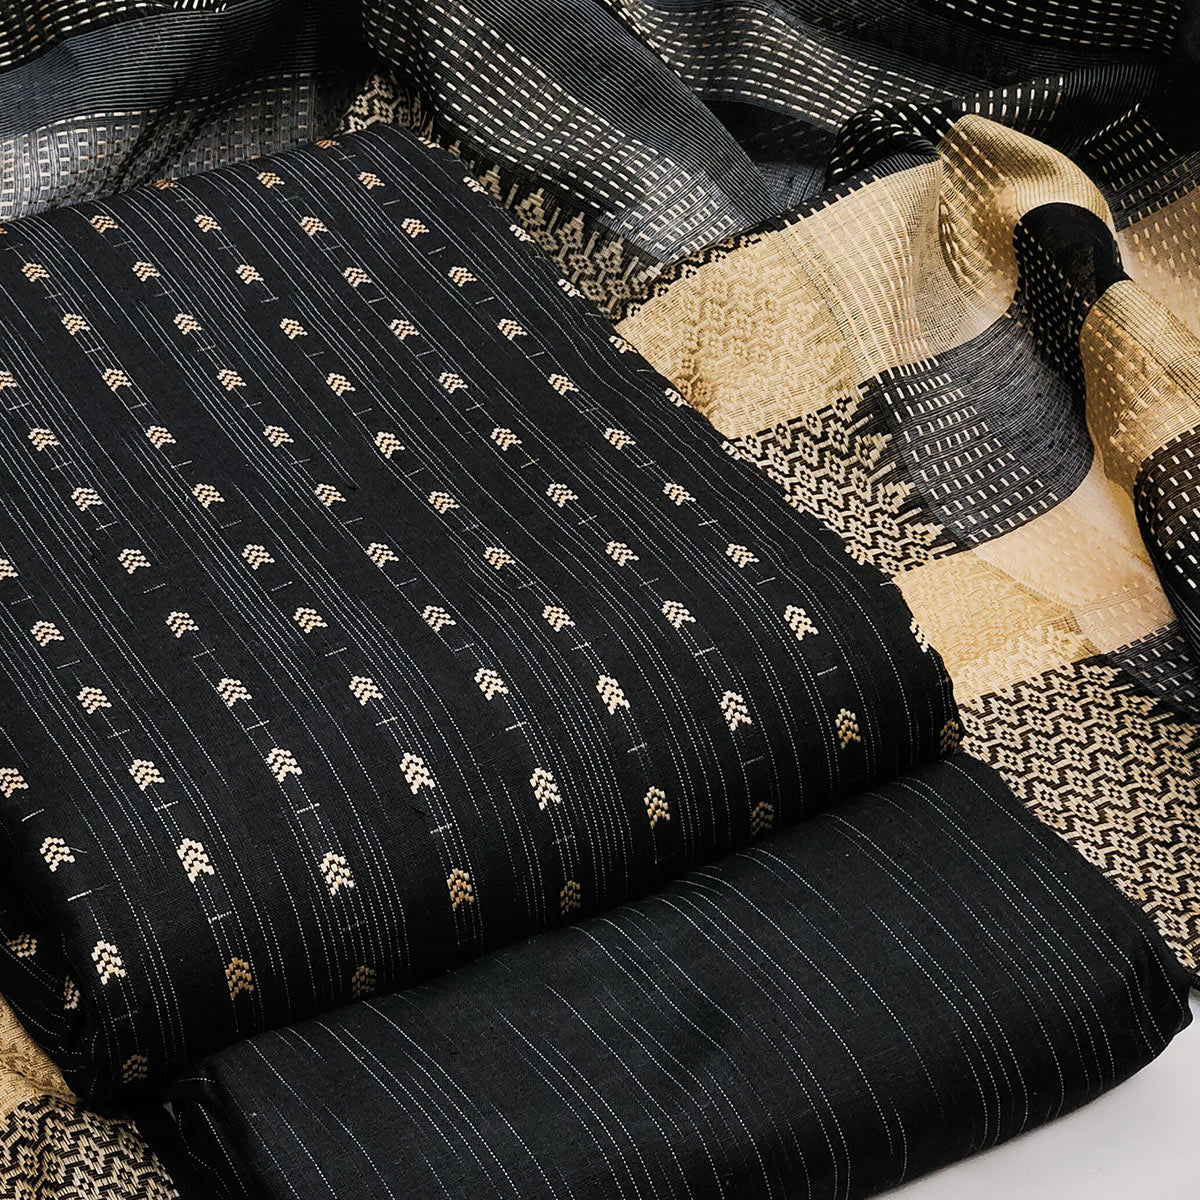 Black Woven Cotton Blend Dress Material